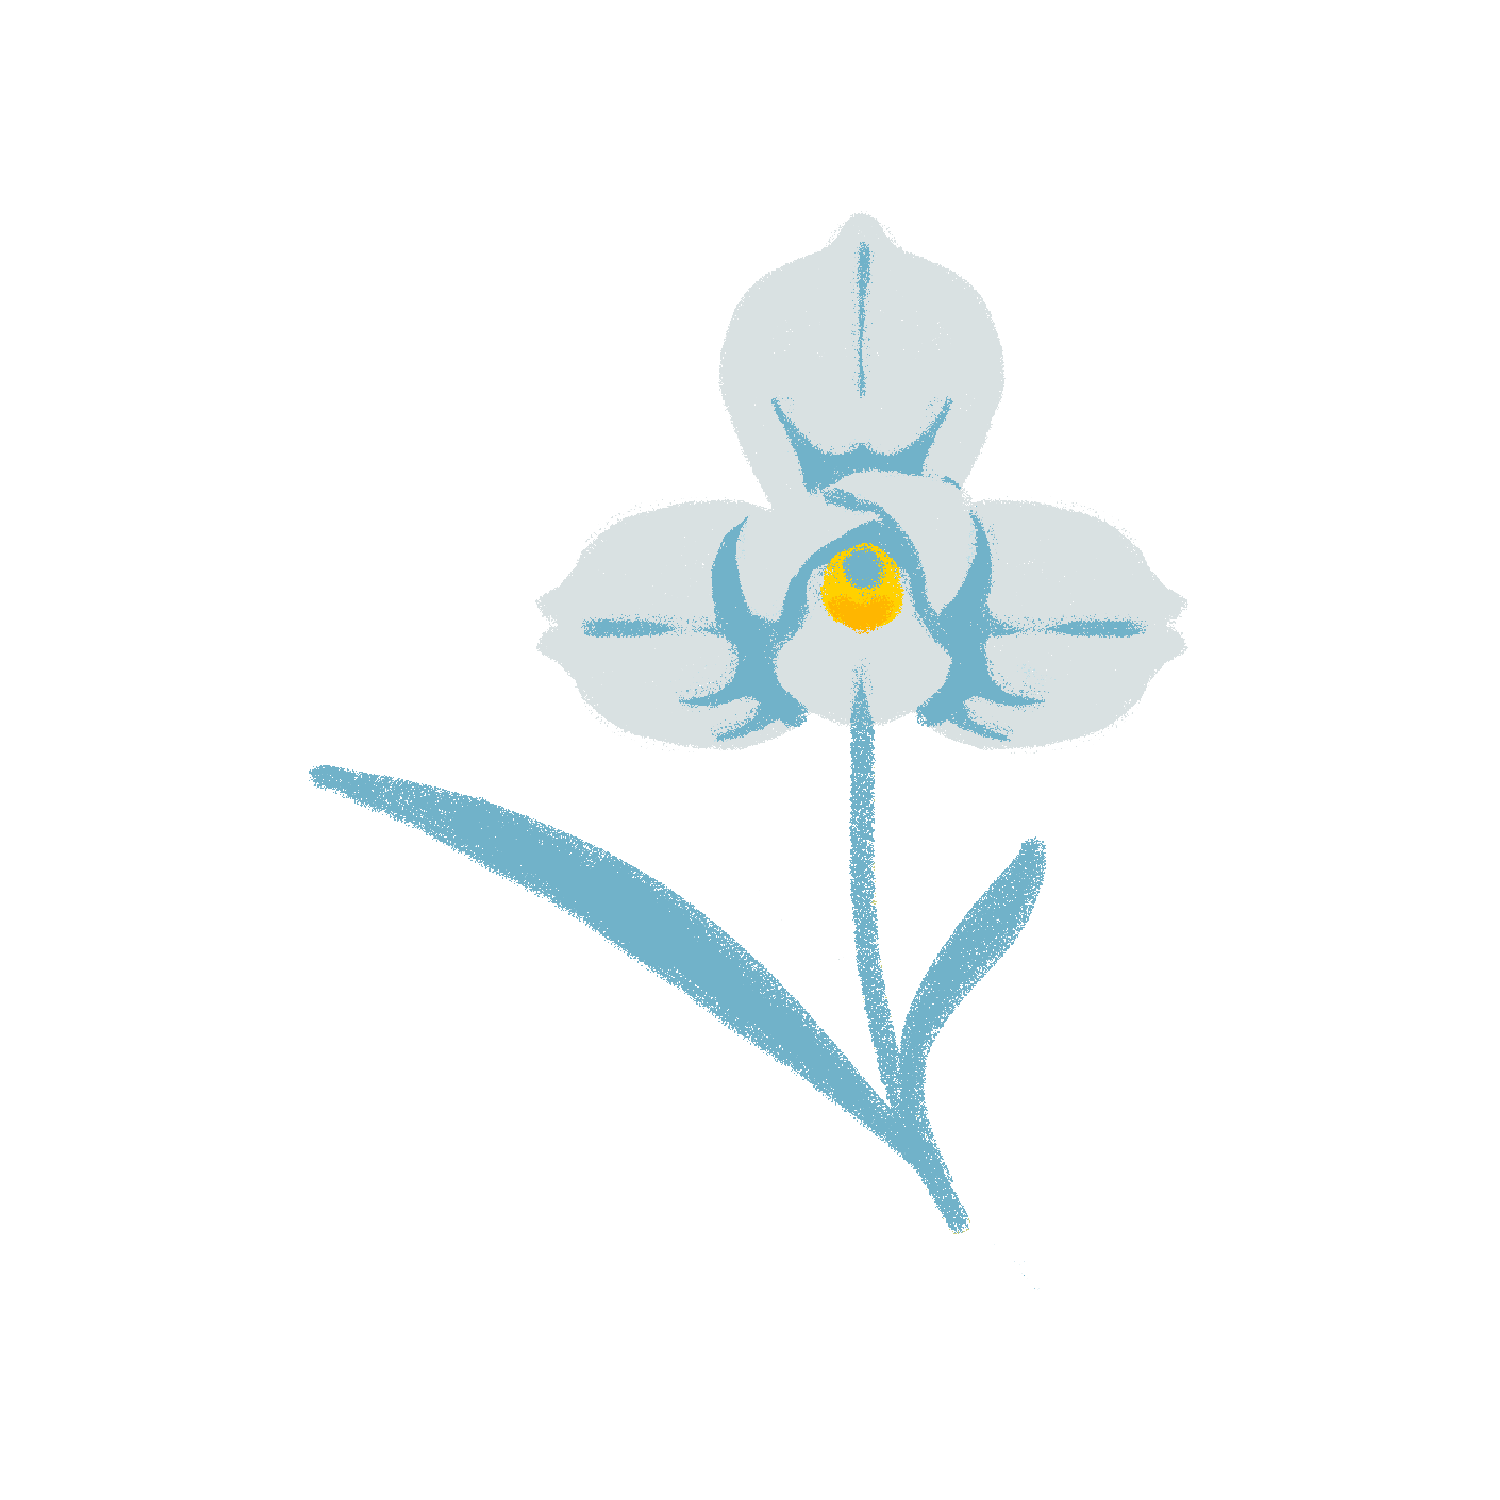 Monja Blanca (White Nun Orchid)